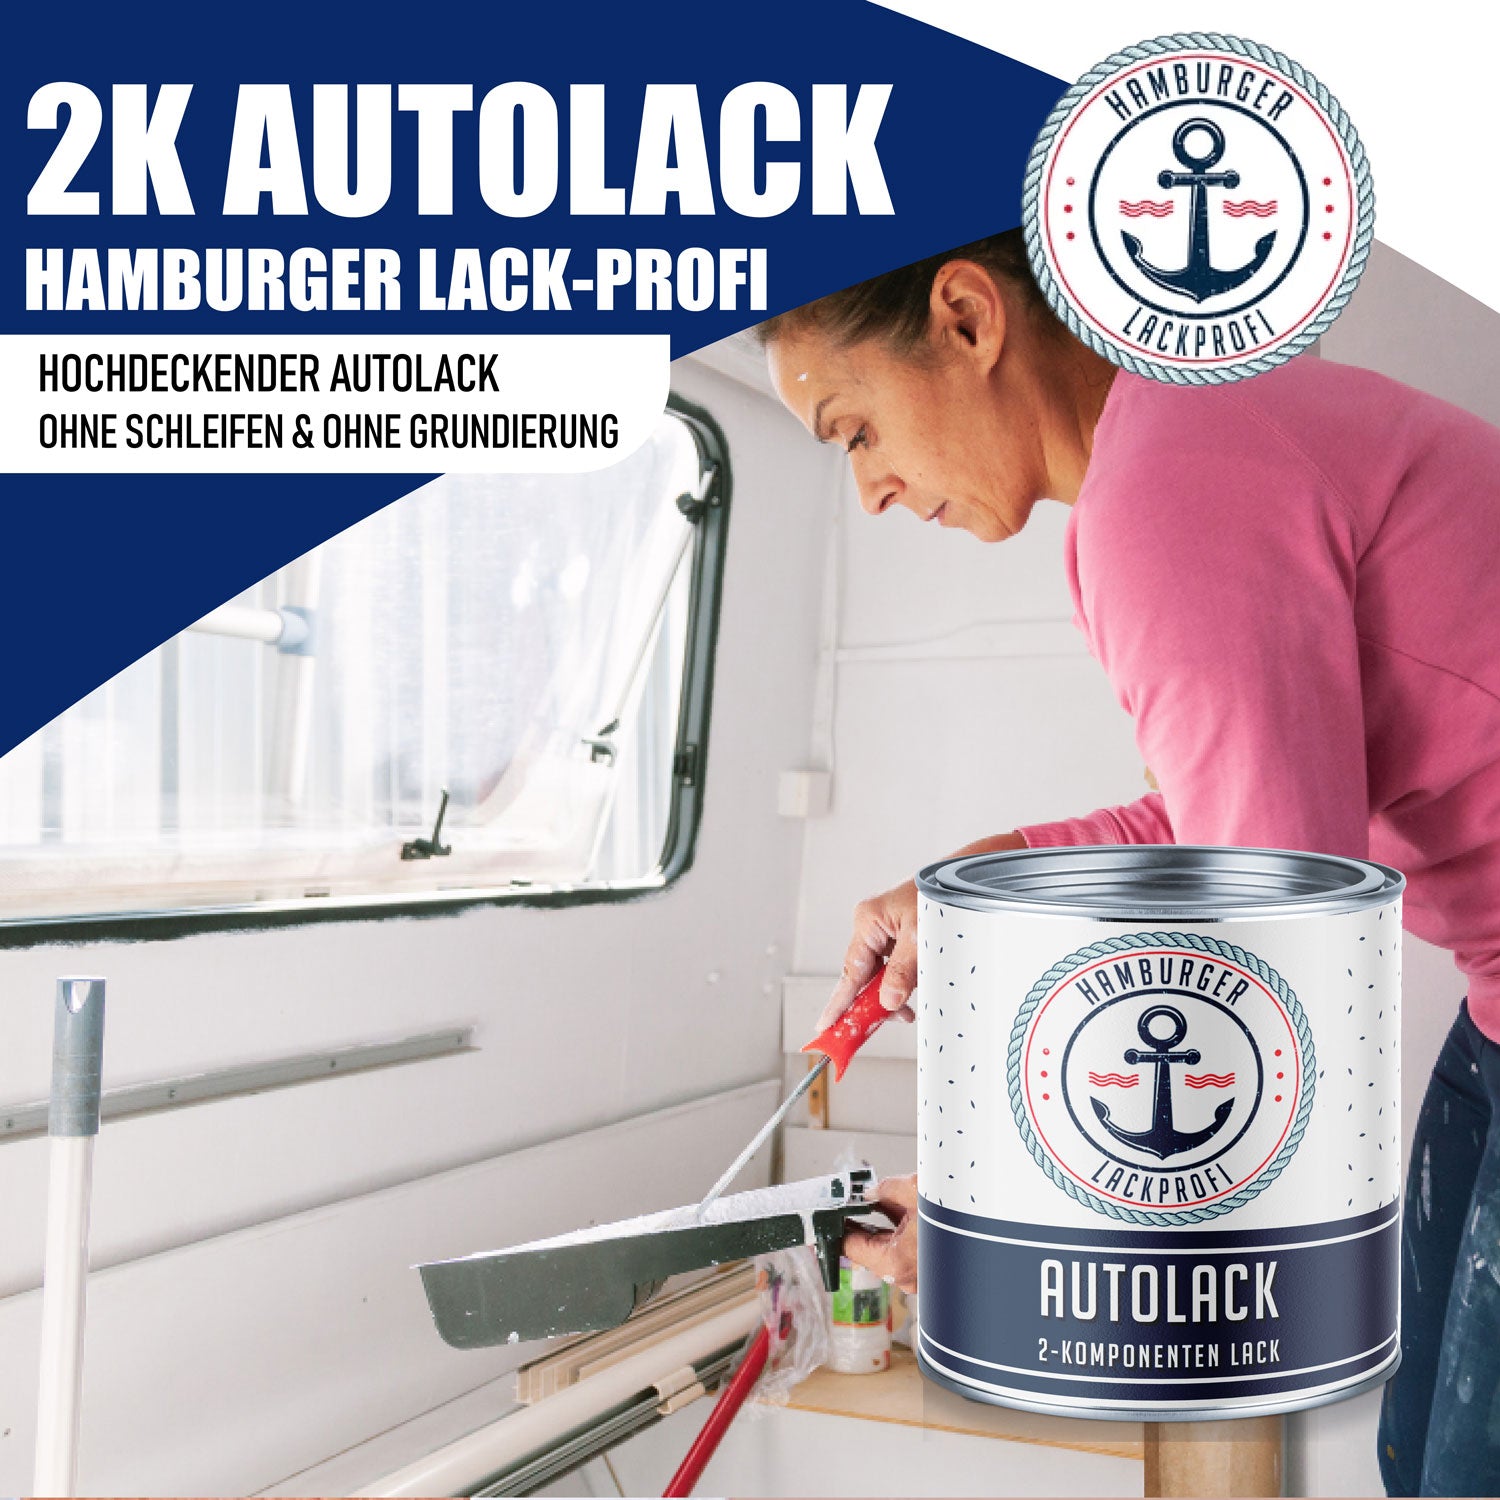 Hamburger Lack-Profi 2K Autolack in Rotorange RAL 2001 mit Lackierset (X300) & Verdünnung (1 L) - 30% Sparangebot